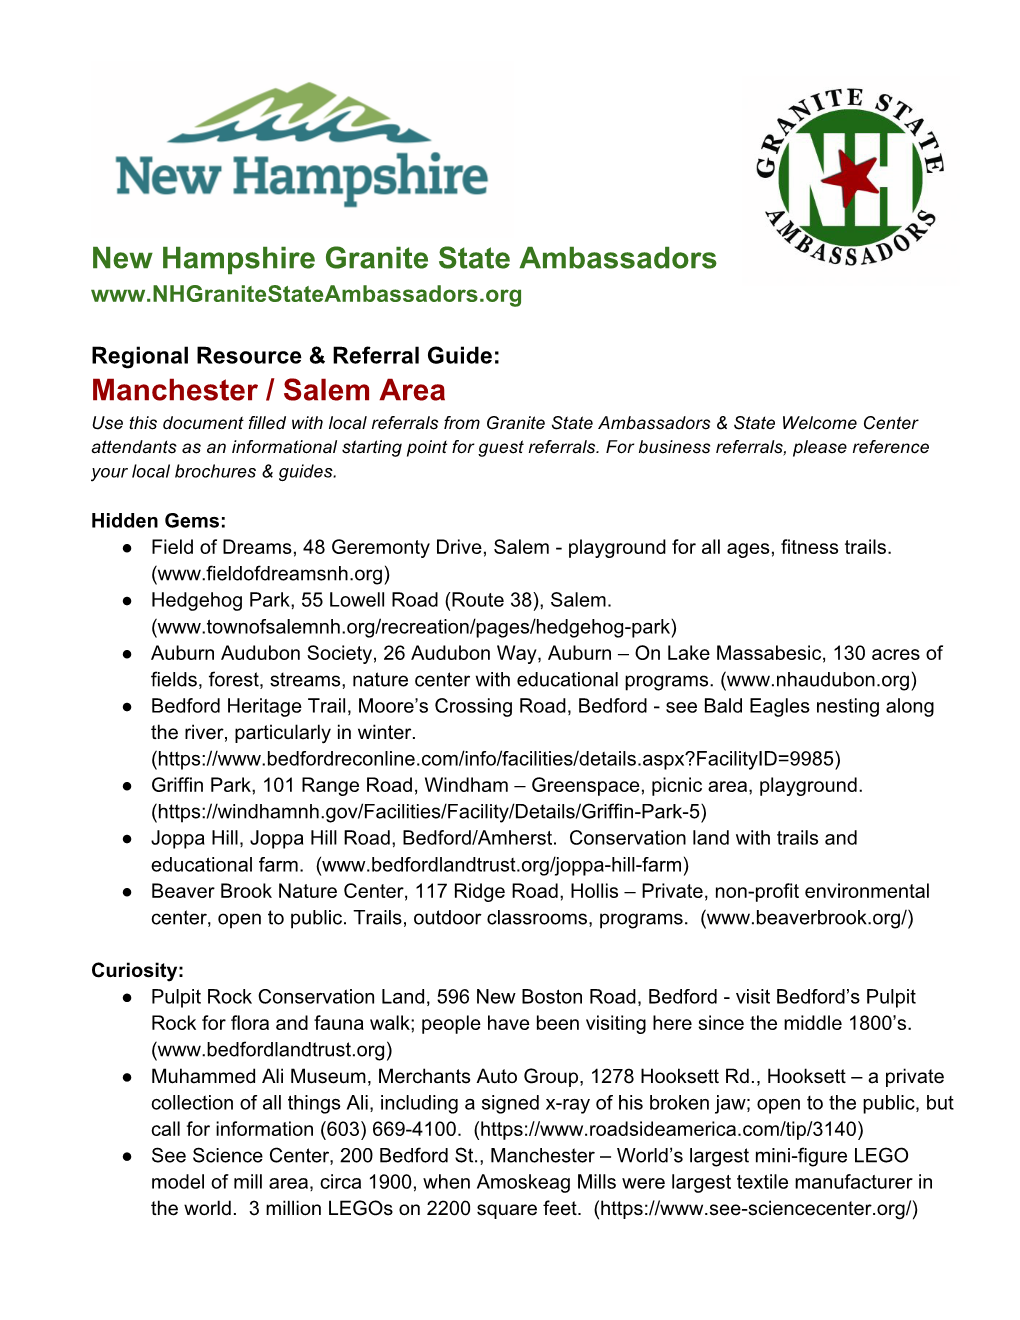 New Hampshire Granite State Ambassadors Manchester / Salem